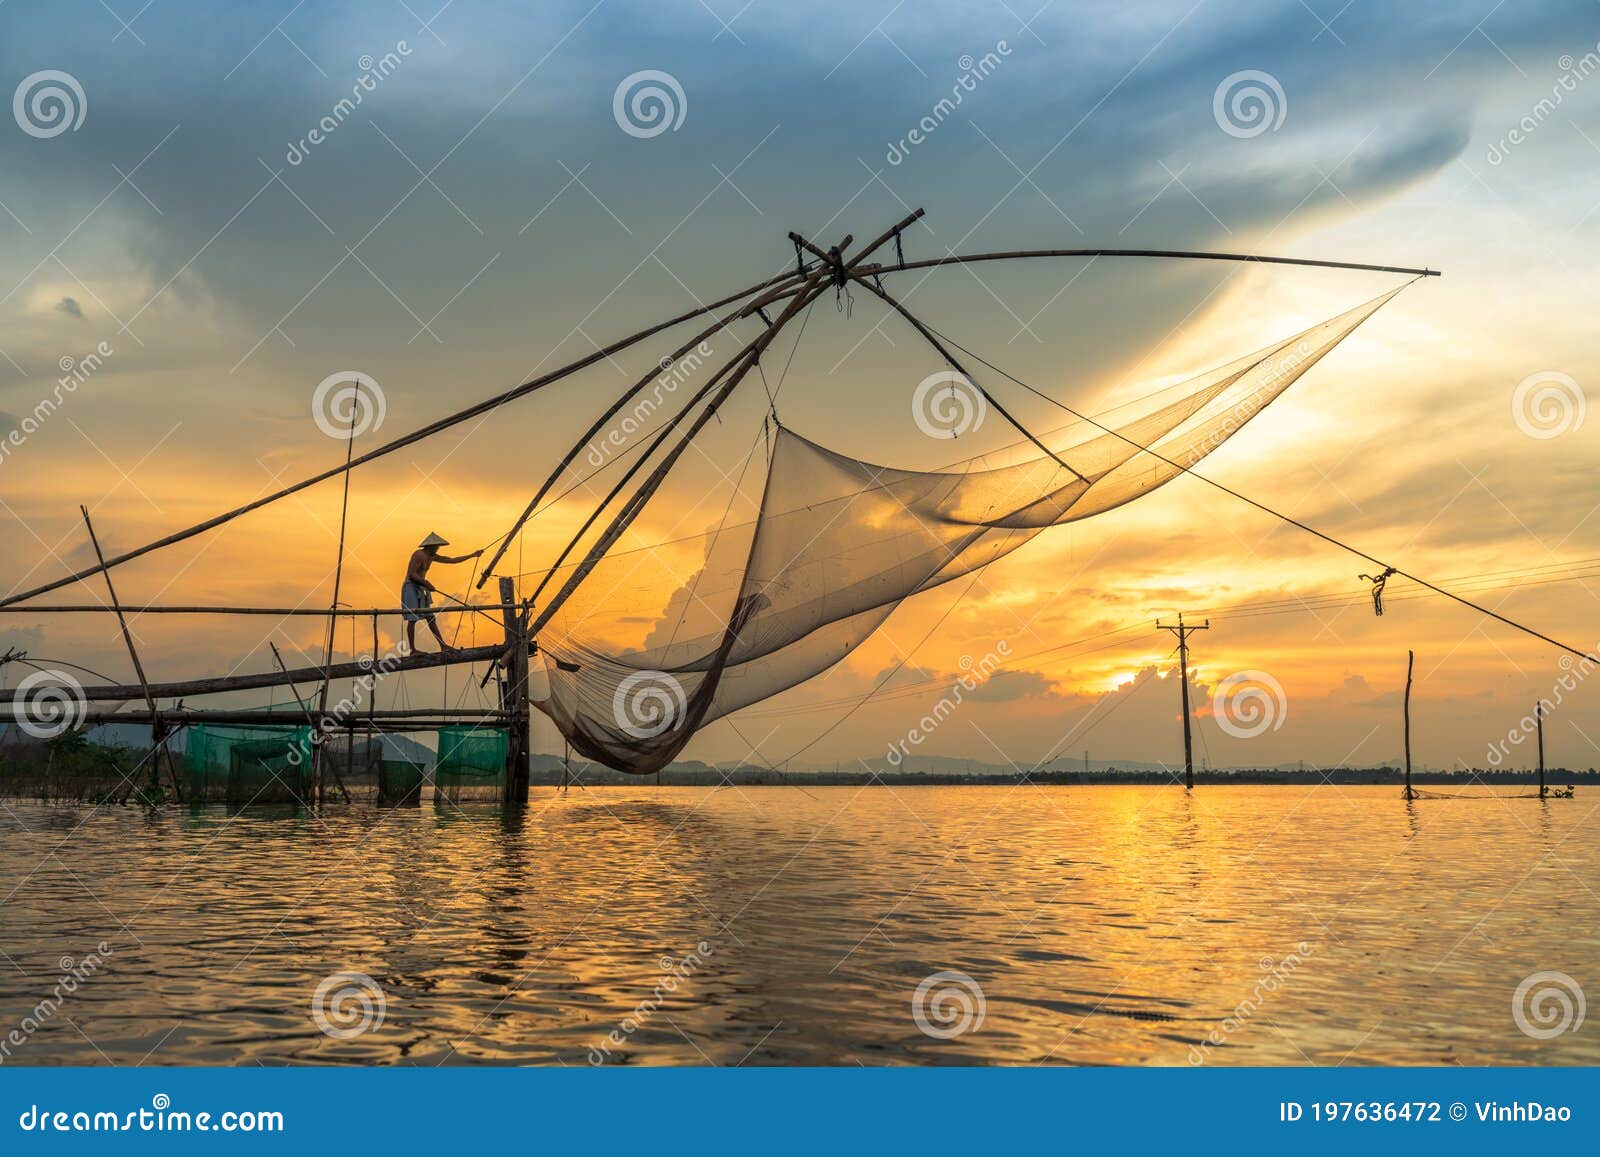 https://thumbs.dreamstime.com/z/mekong-delta-landscape-big-fishing-net-floating-water-season-chau-doc-giang-province-south-vietnam-197636472.jpg